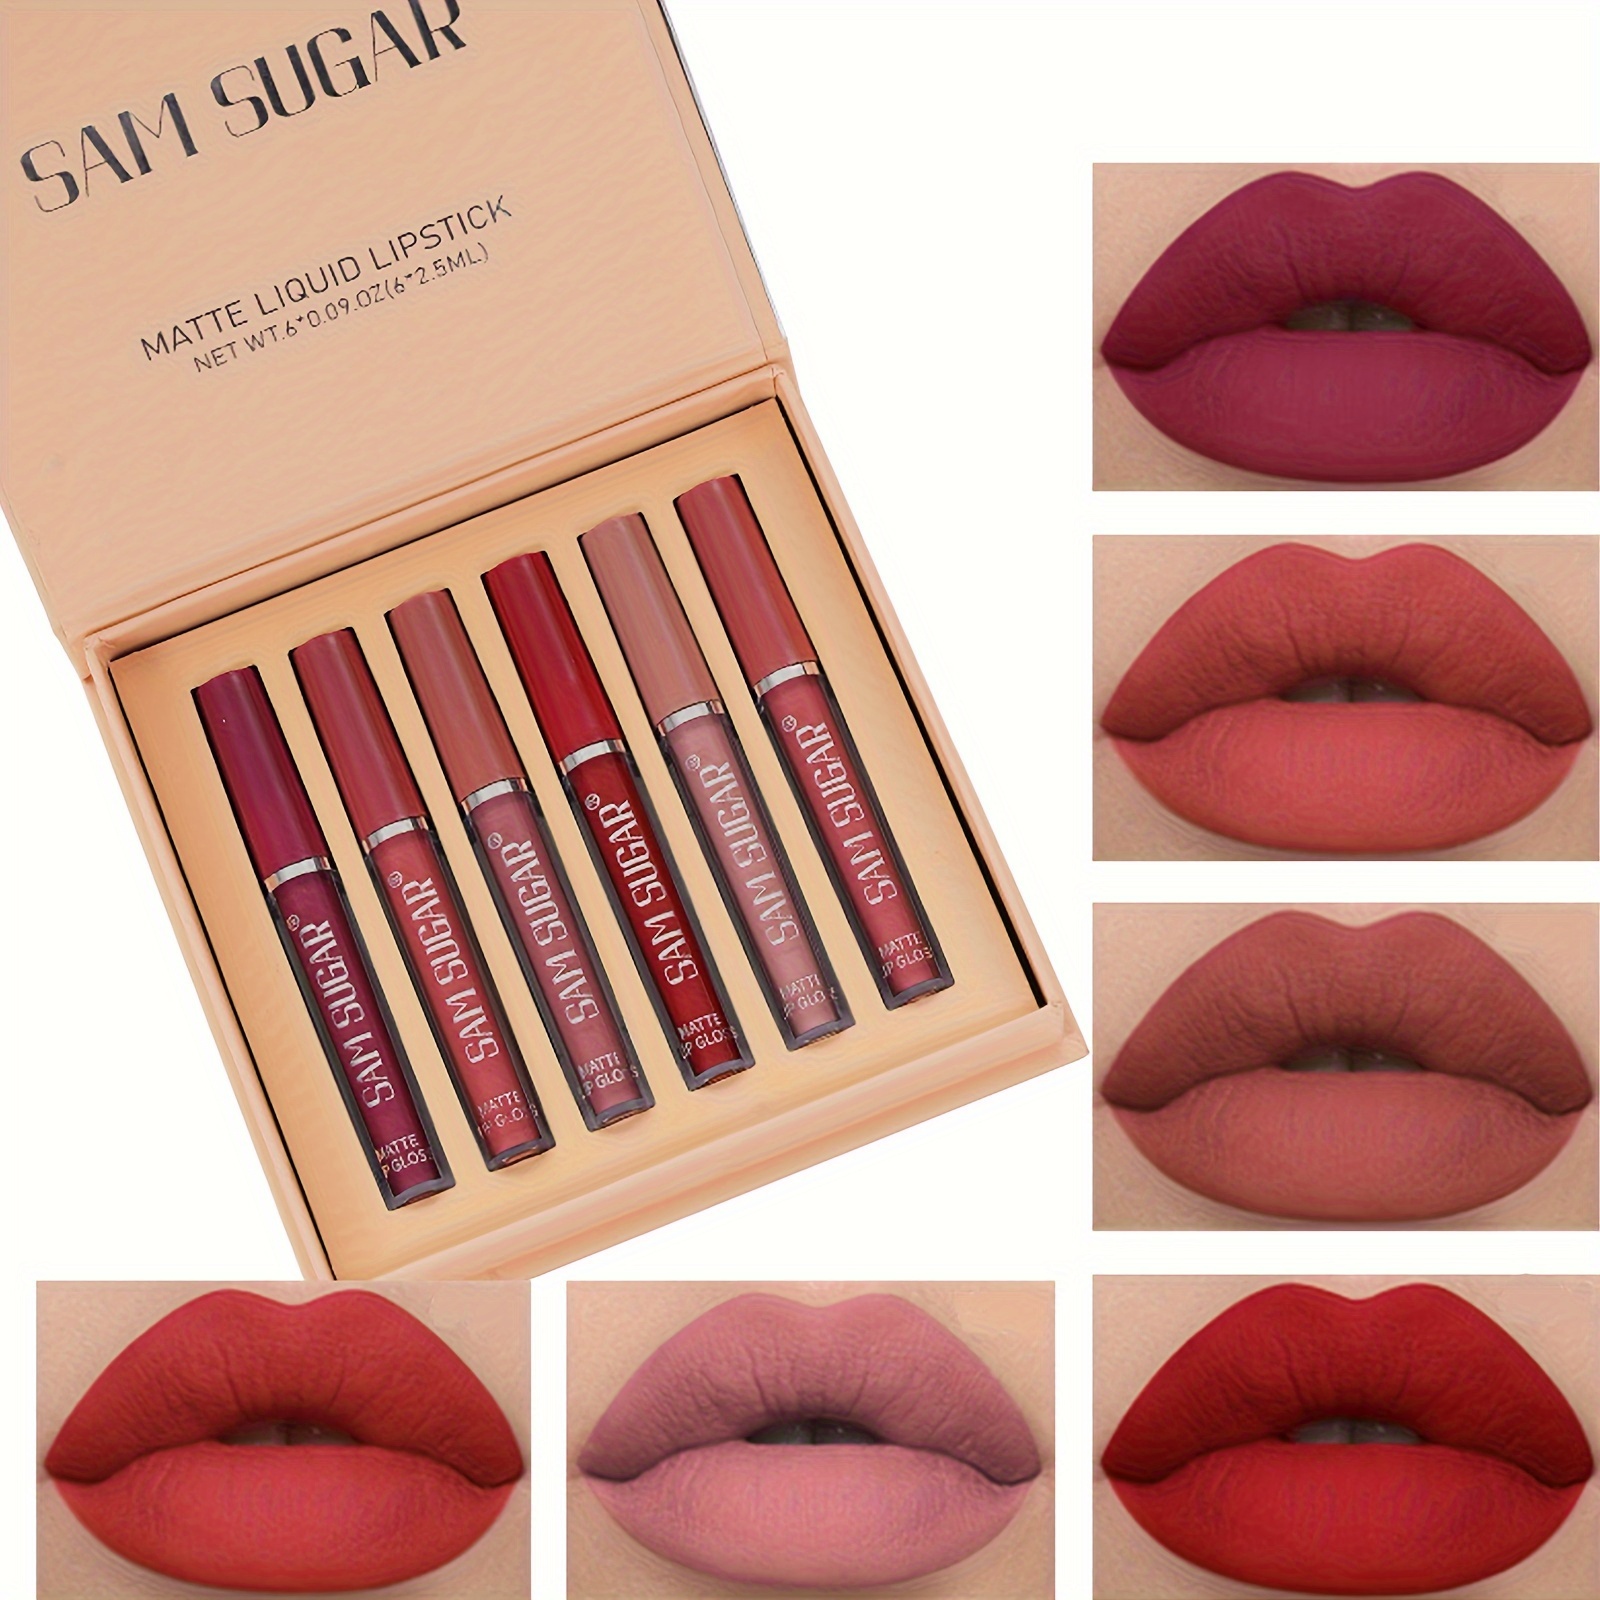 

Matte Liquid Lipstick Makeup Set, 6 Colors Velvety Nude Lip Gloss, Gift Box Included, Long-lasting Waterproof Lip Glaze, Lip Makeup Gifts For Women